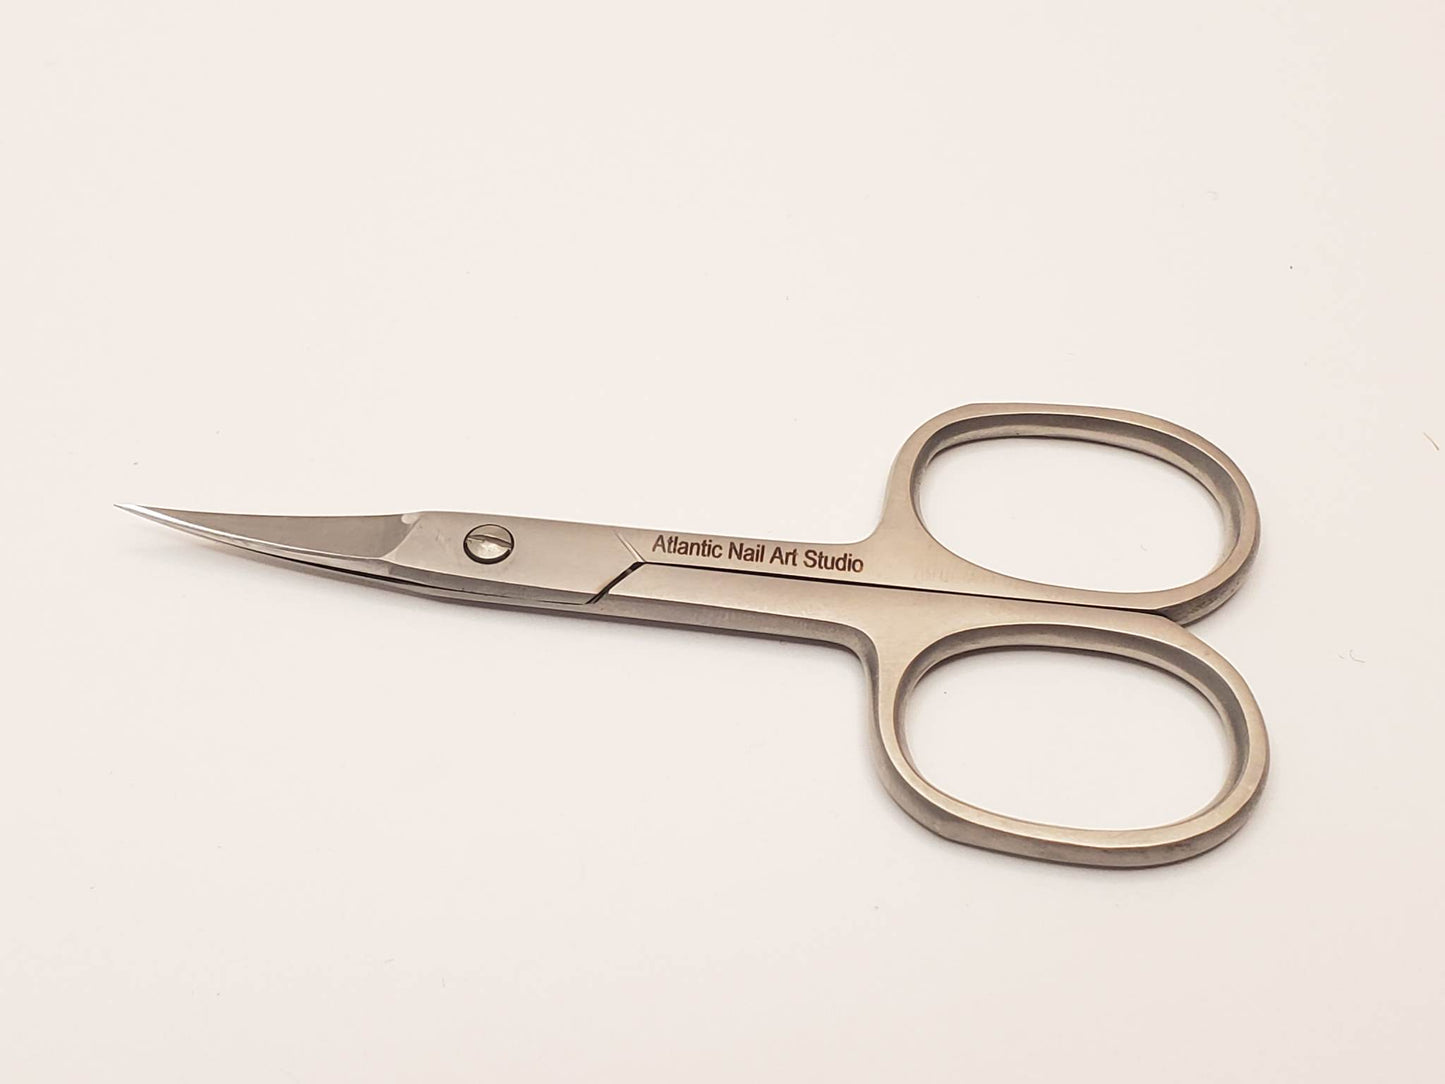 Atlantic Nail Art Studio - Cuticle scissors 92.30